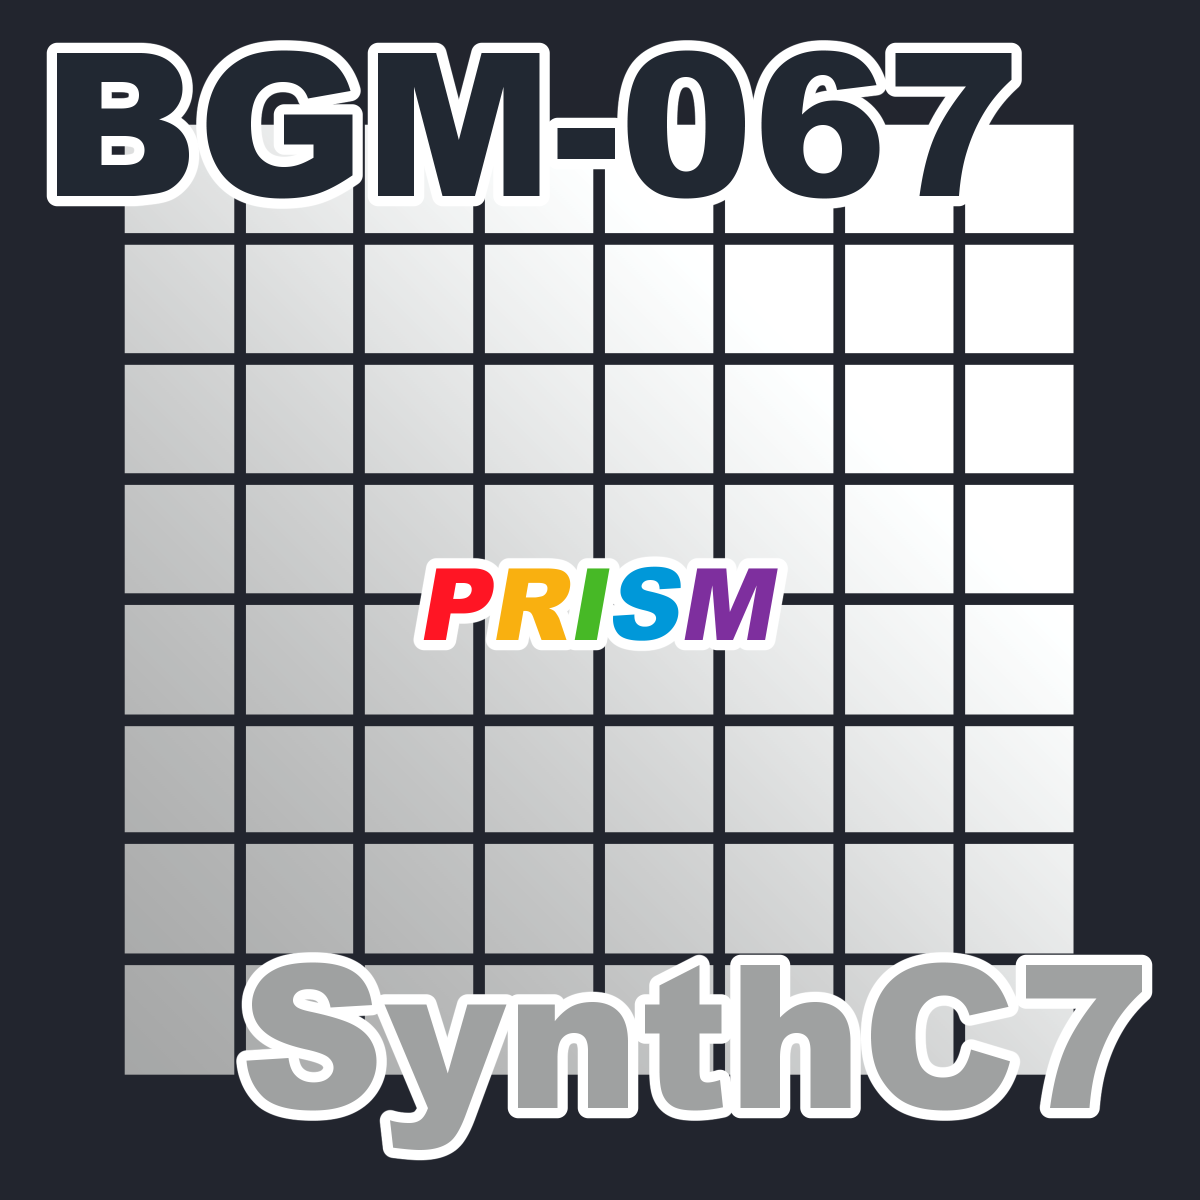 BGM-067 SynthC7 -Short ver.-